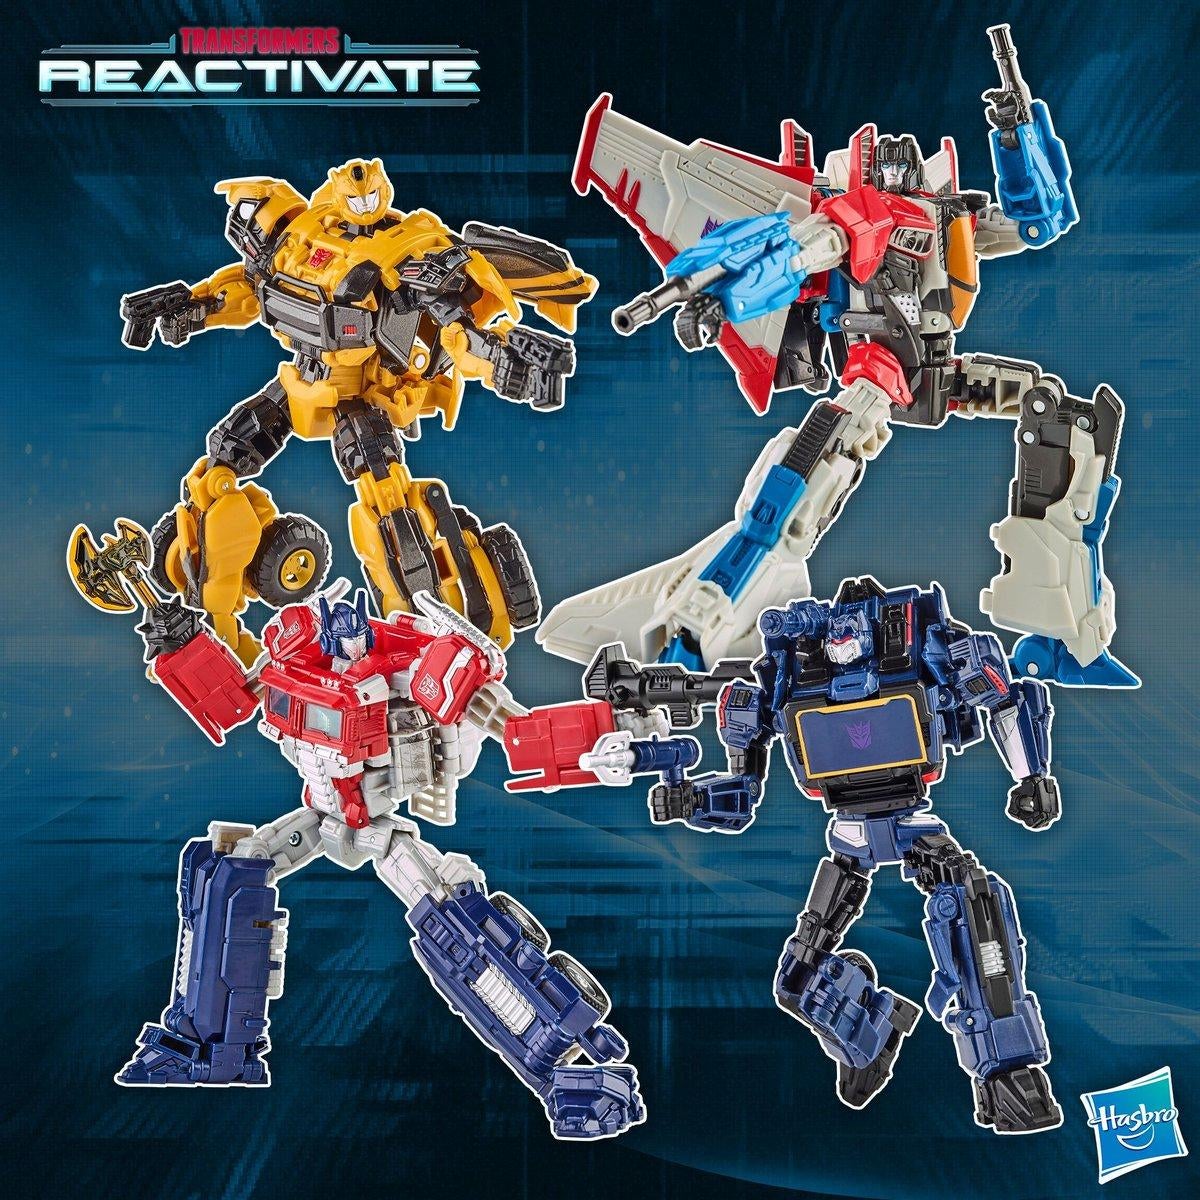 Transformers: Reactivate Optimus Prime and Soundwave Figures